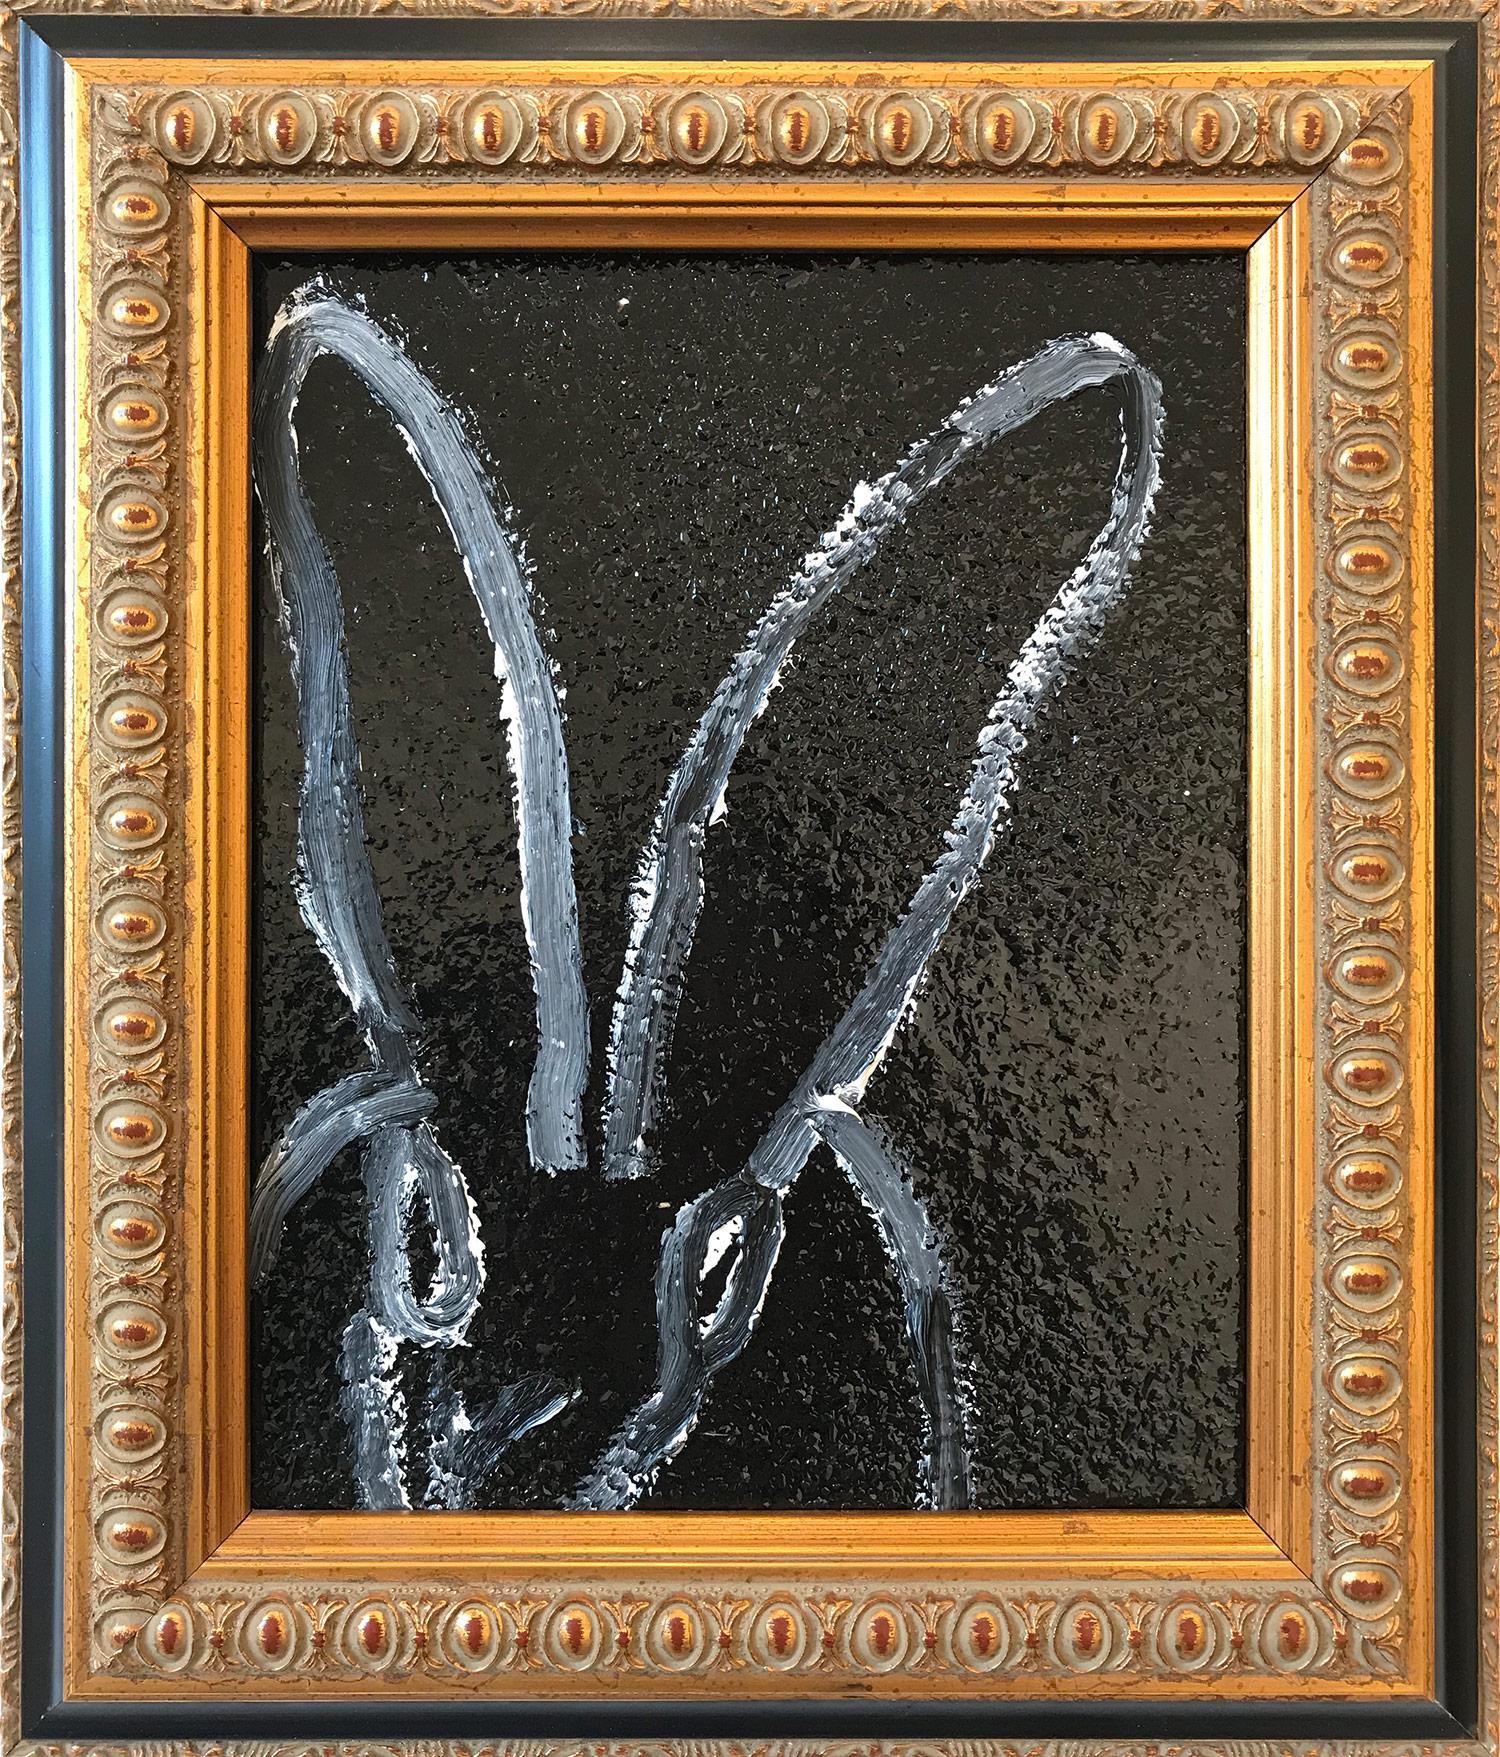 Hunt Slonem Abstract Painting - "Untitled (Bunny on Black Diamond Dust)" Oil Painting on Wood Panel